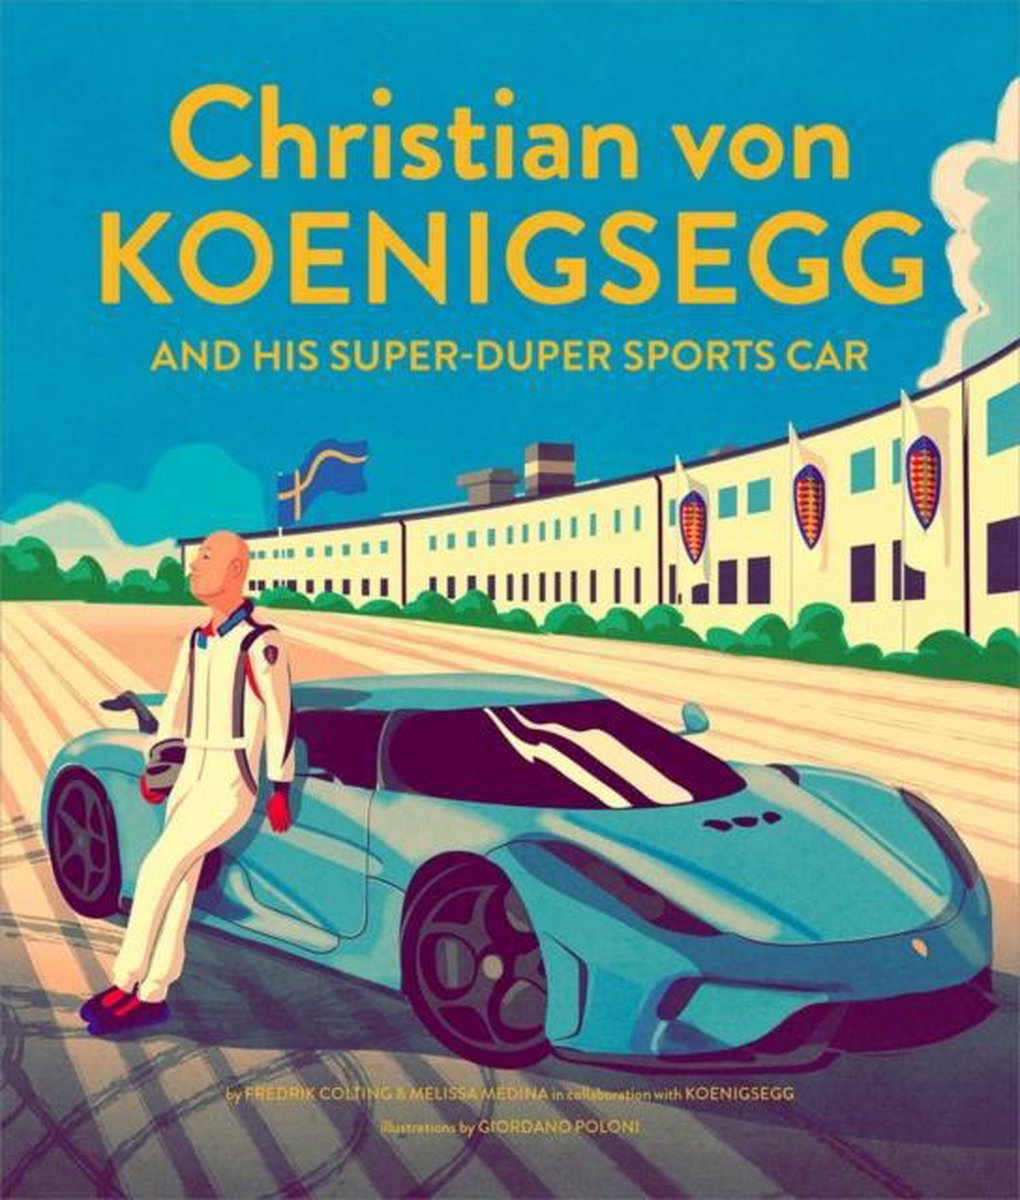 Koenigsegg christian von Christian von